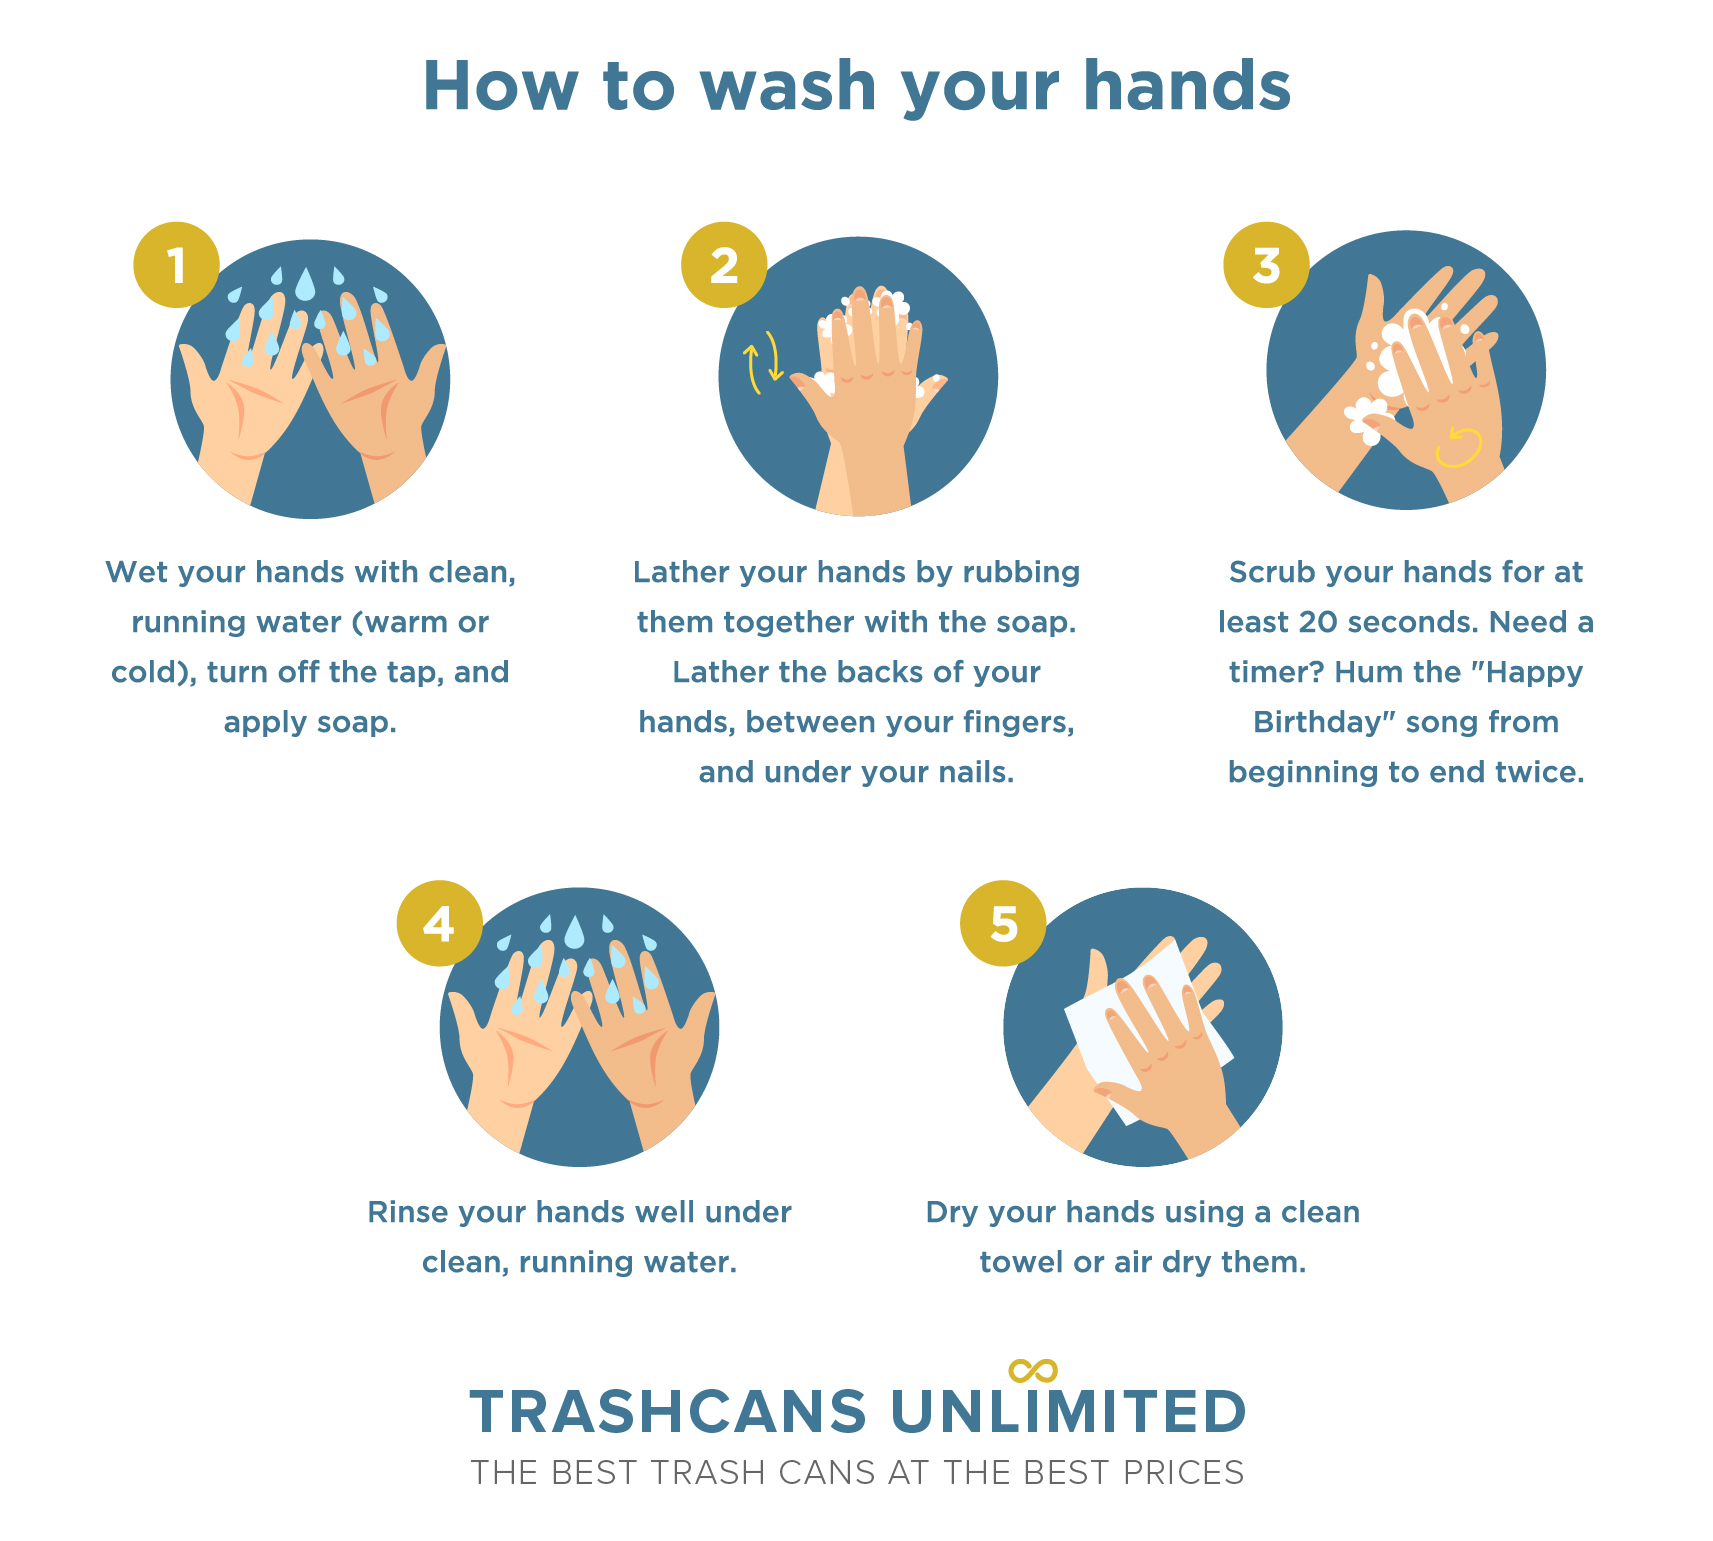 steps for proper hand washing protocol